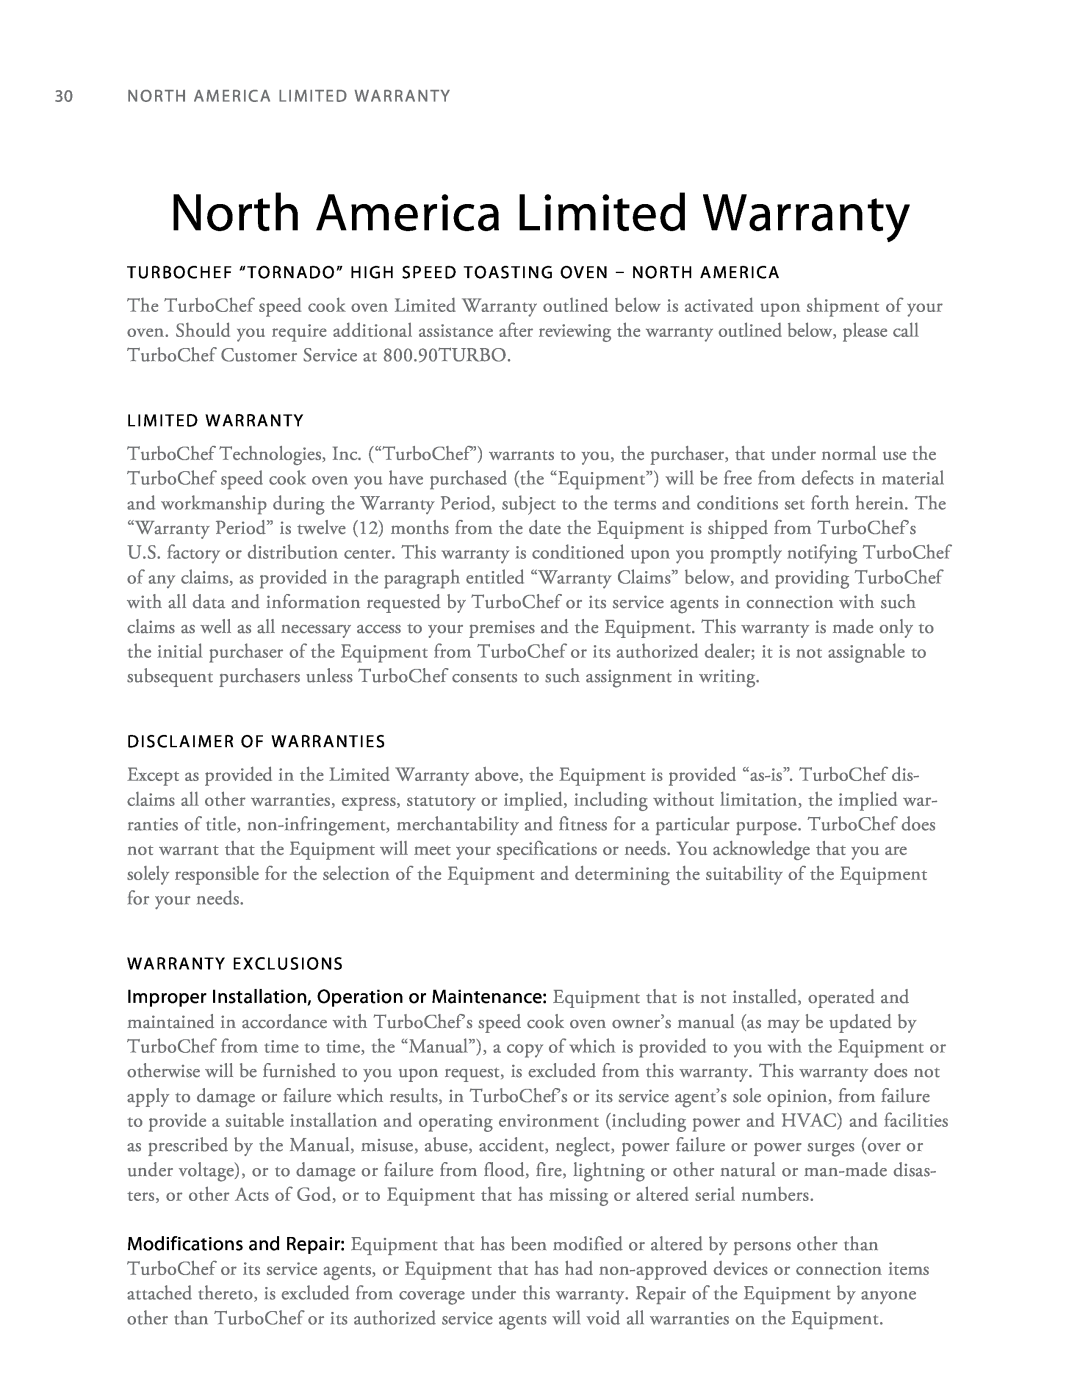 Turbo Chef Technologies Tornado 2 North America Limited Warranty, Disclaimer Of Warranties, Warranty Exclusions 